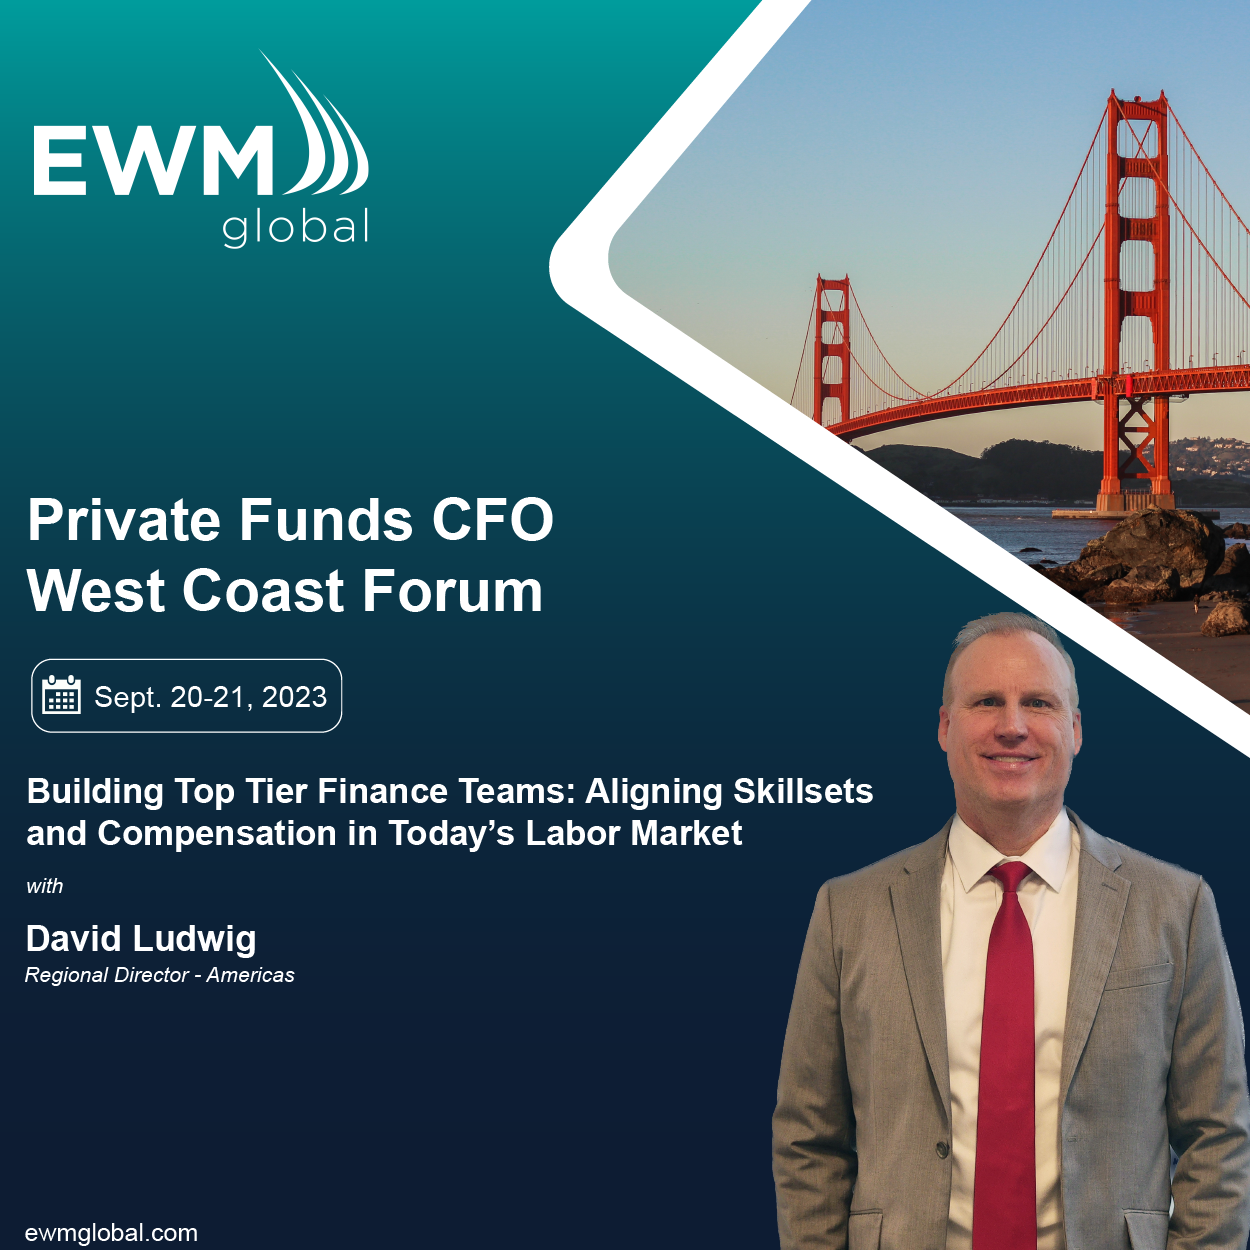 EWM Global to Sponsor Private Funds CFO West Coast Forum